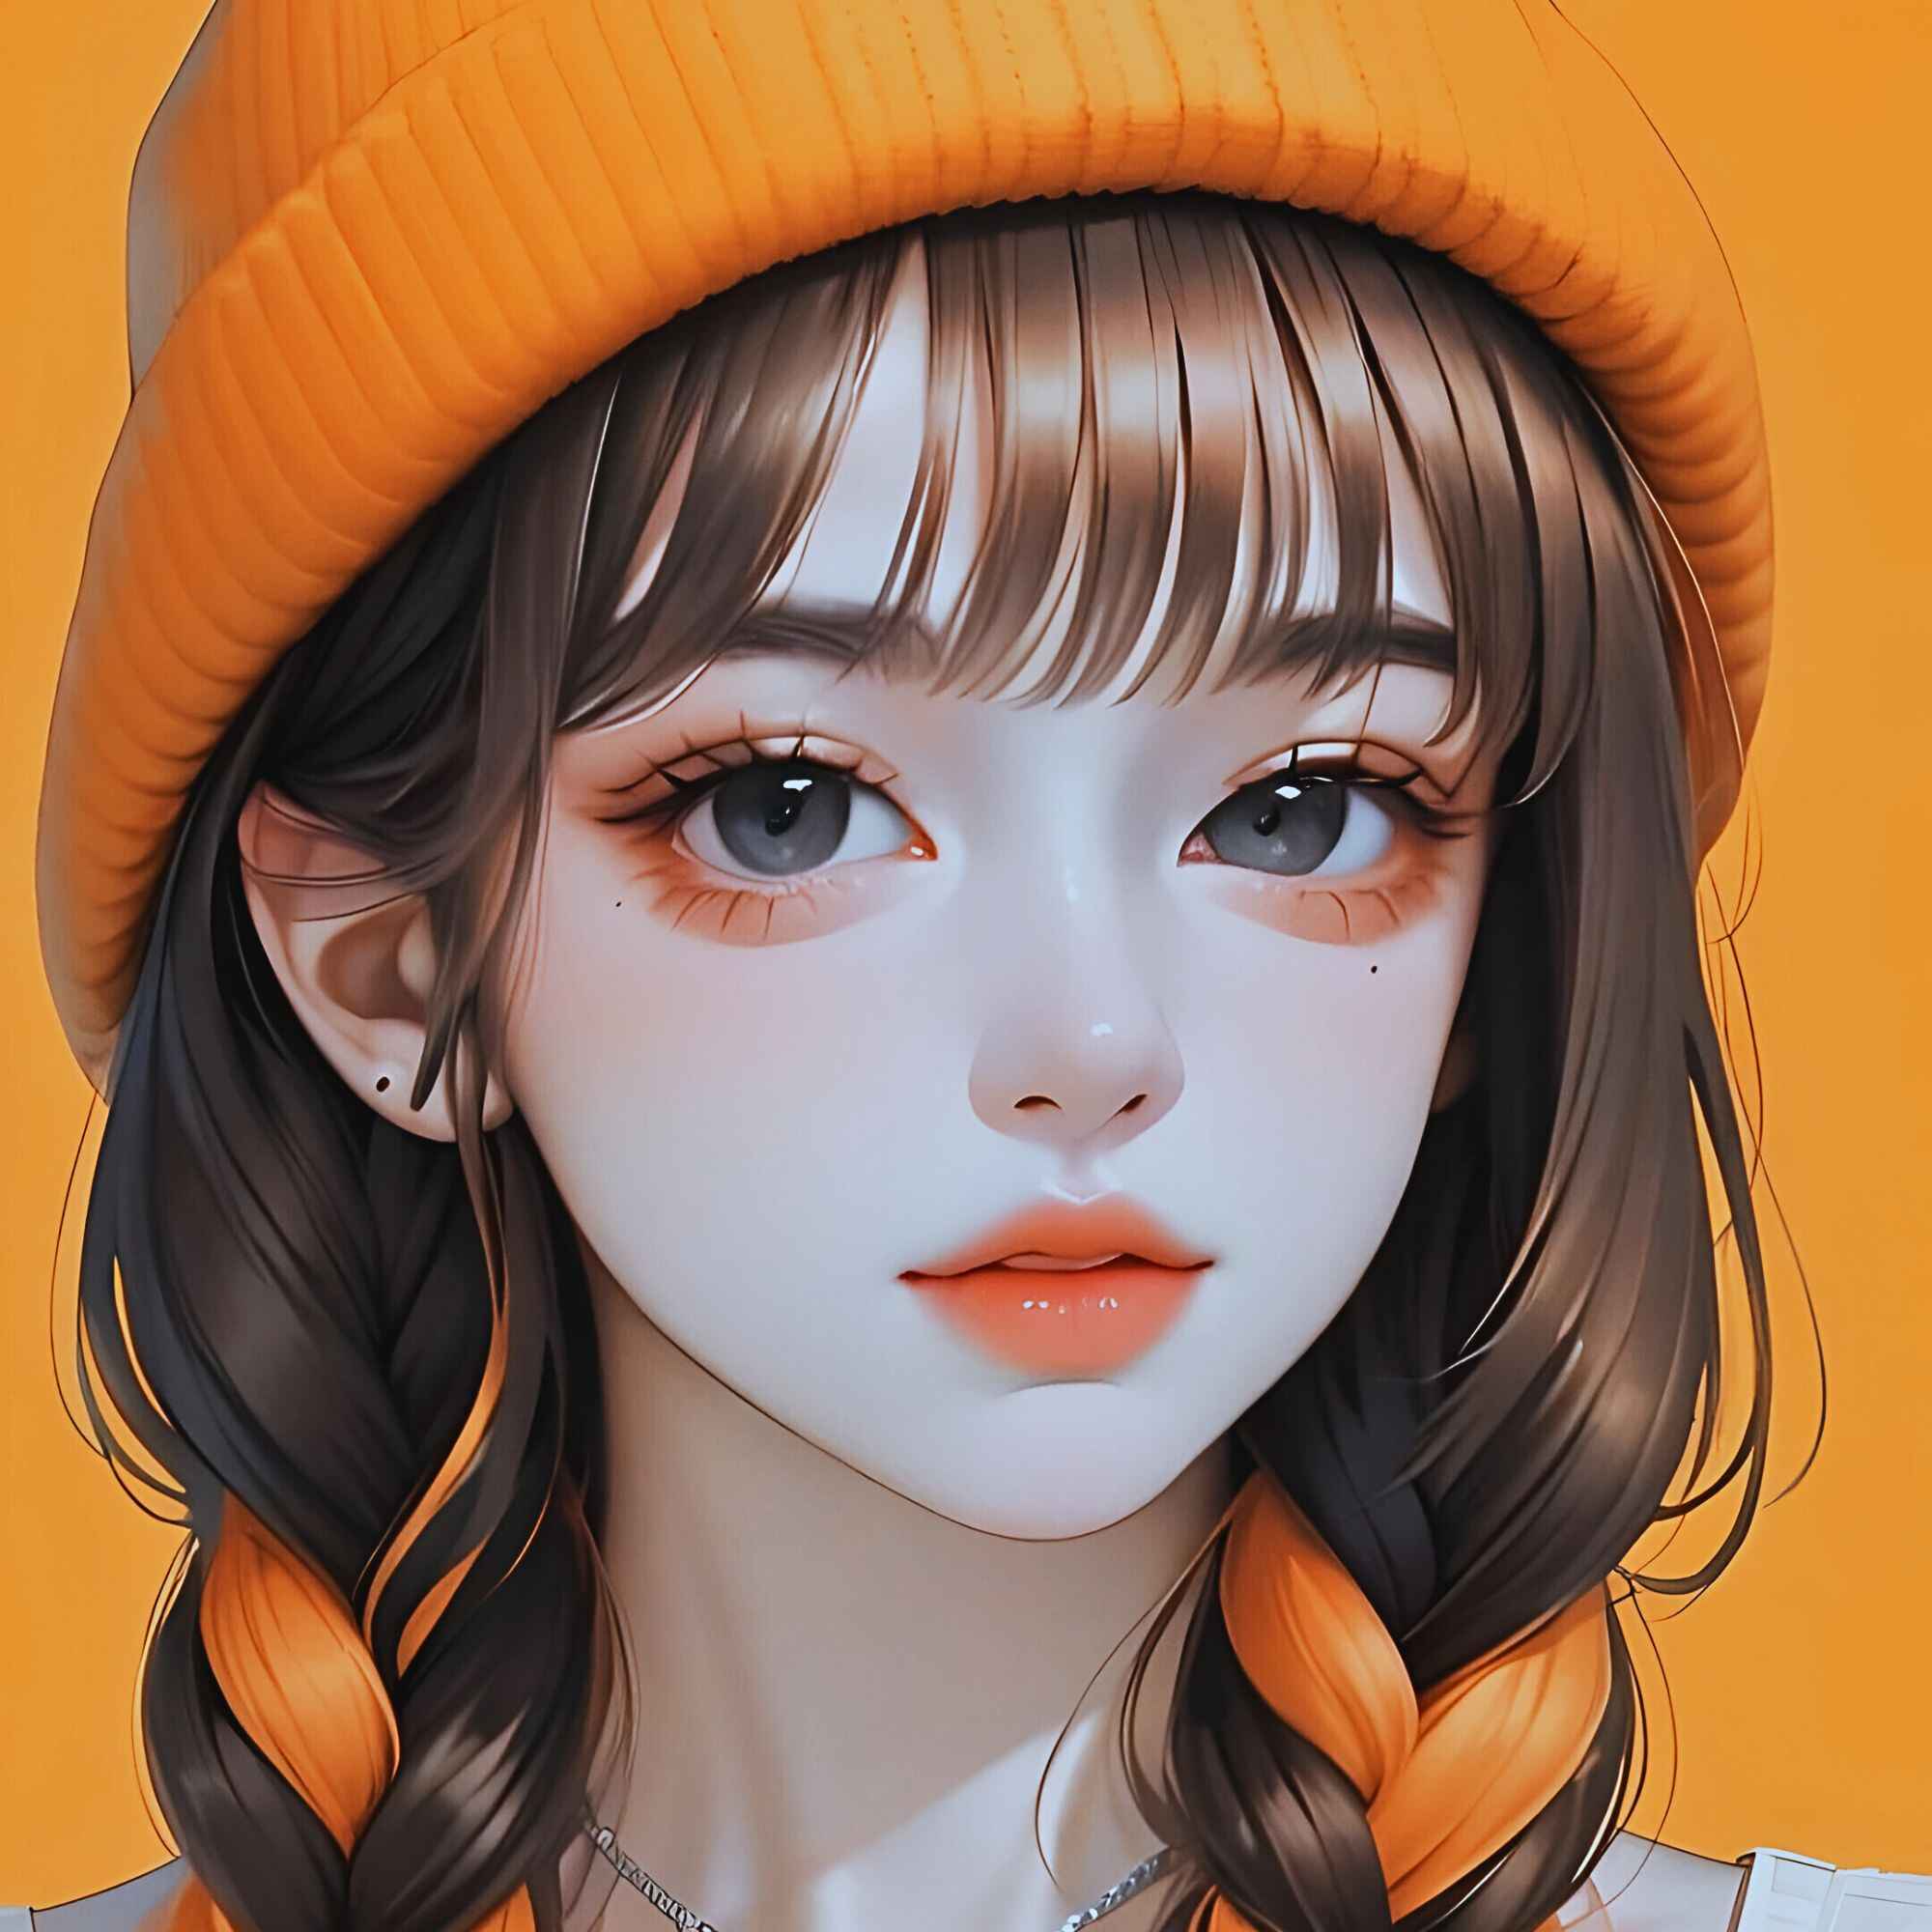 Cool Cute Anime Girl Profile Picture